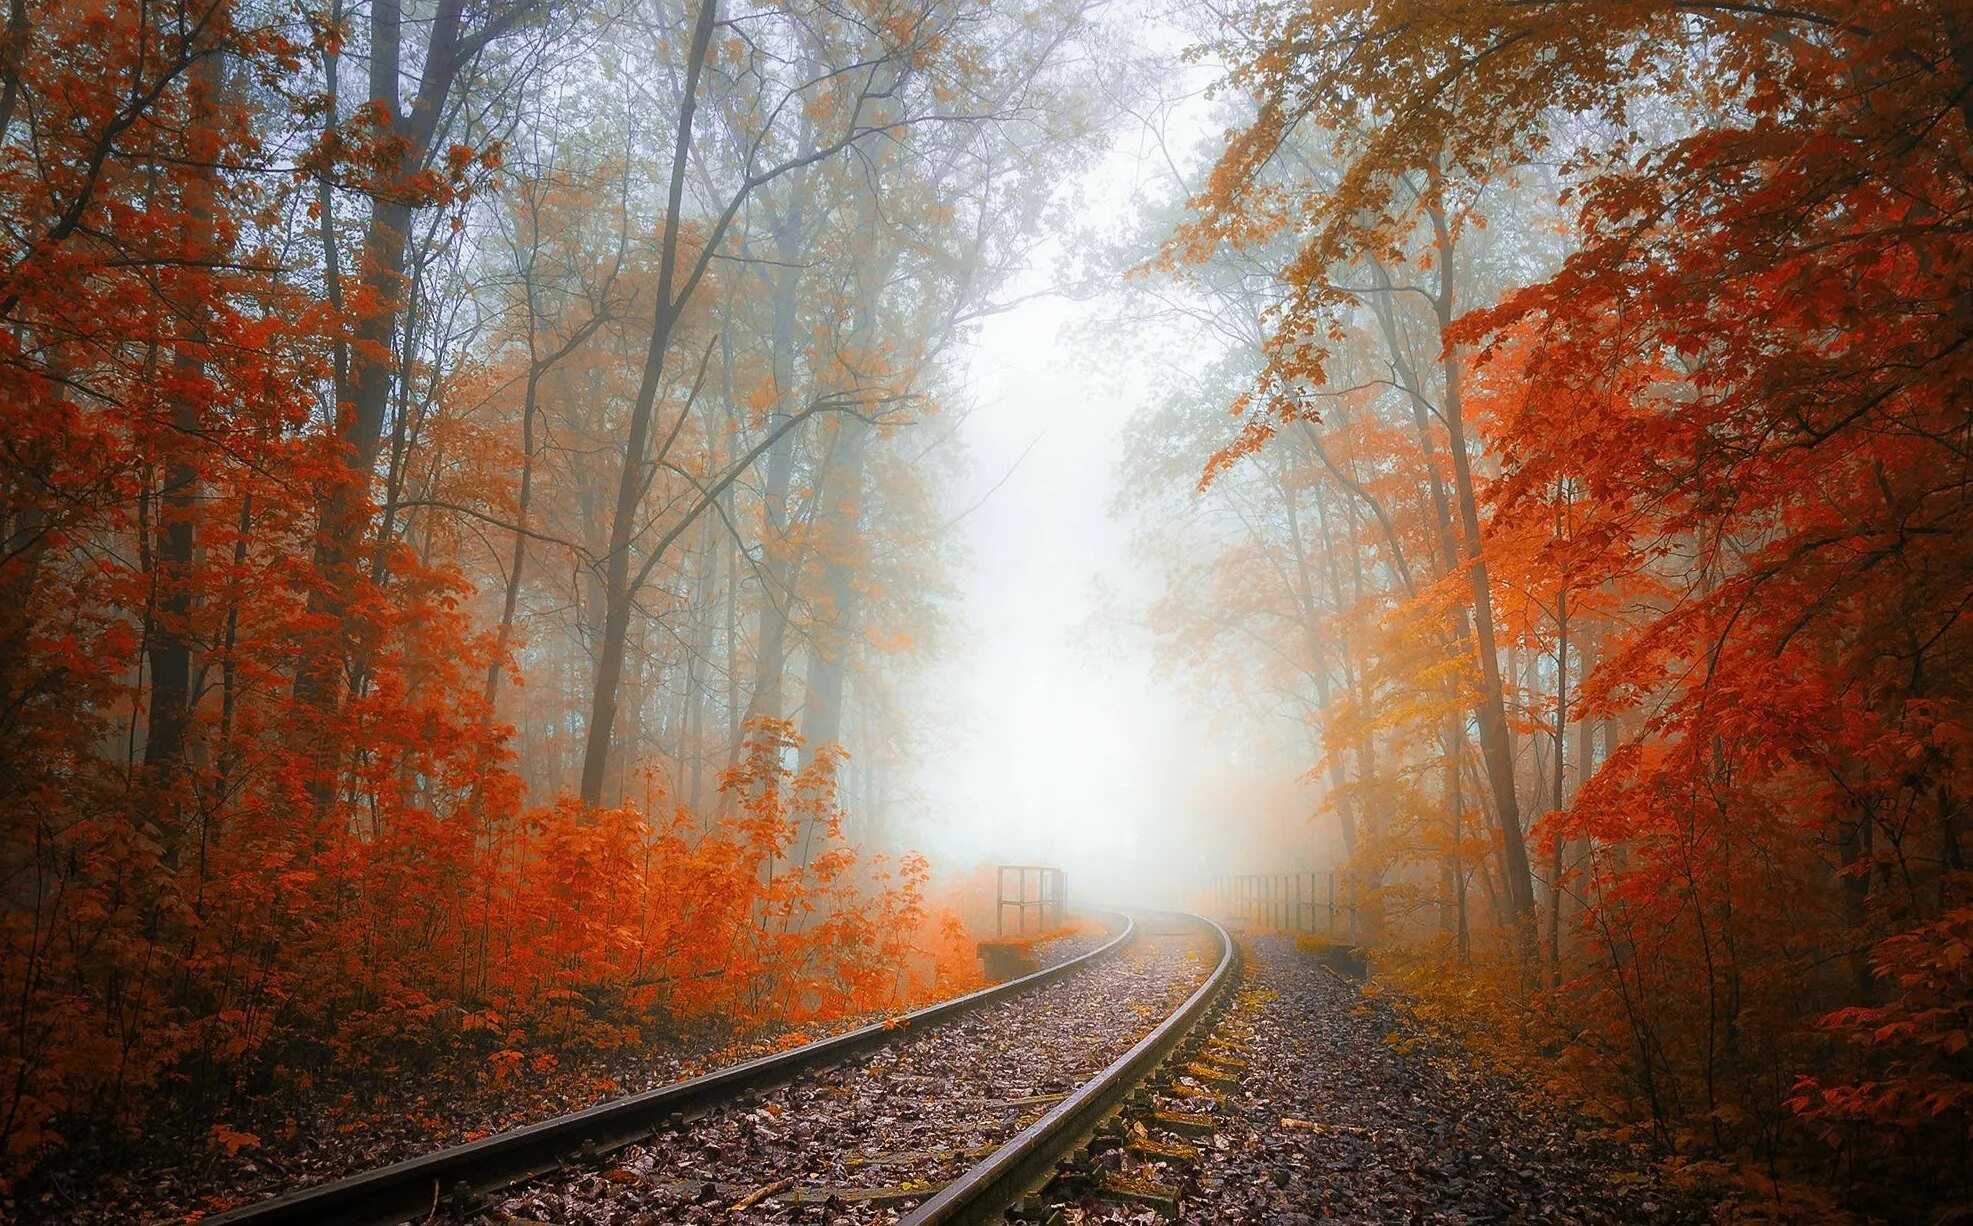 Осенняя дорога домой. Осенняя дорога. Железная дорога осень. Дорога в осень. Поезд в осеннем лесу.